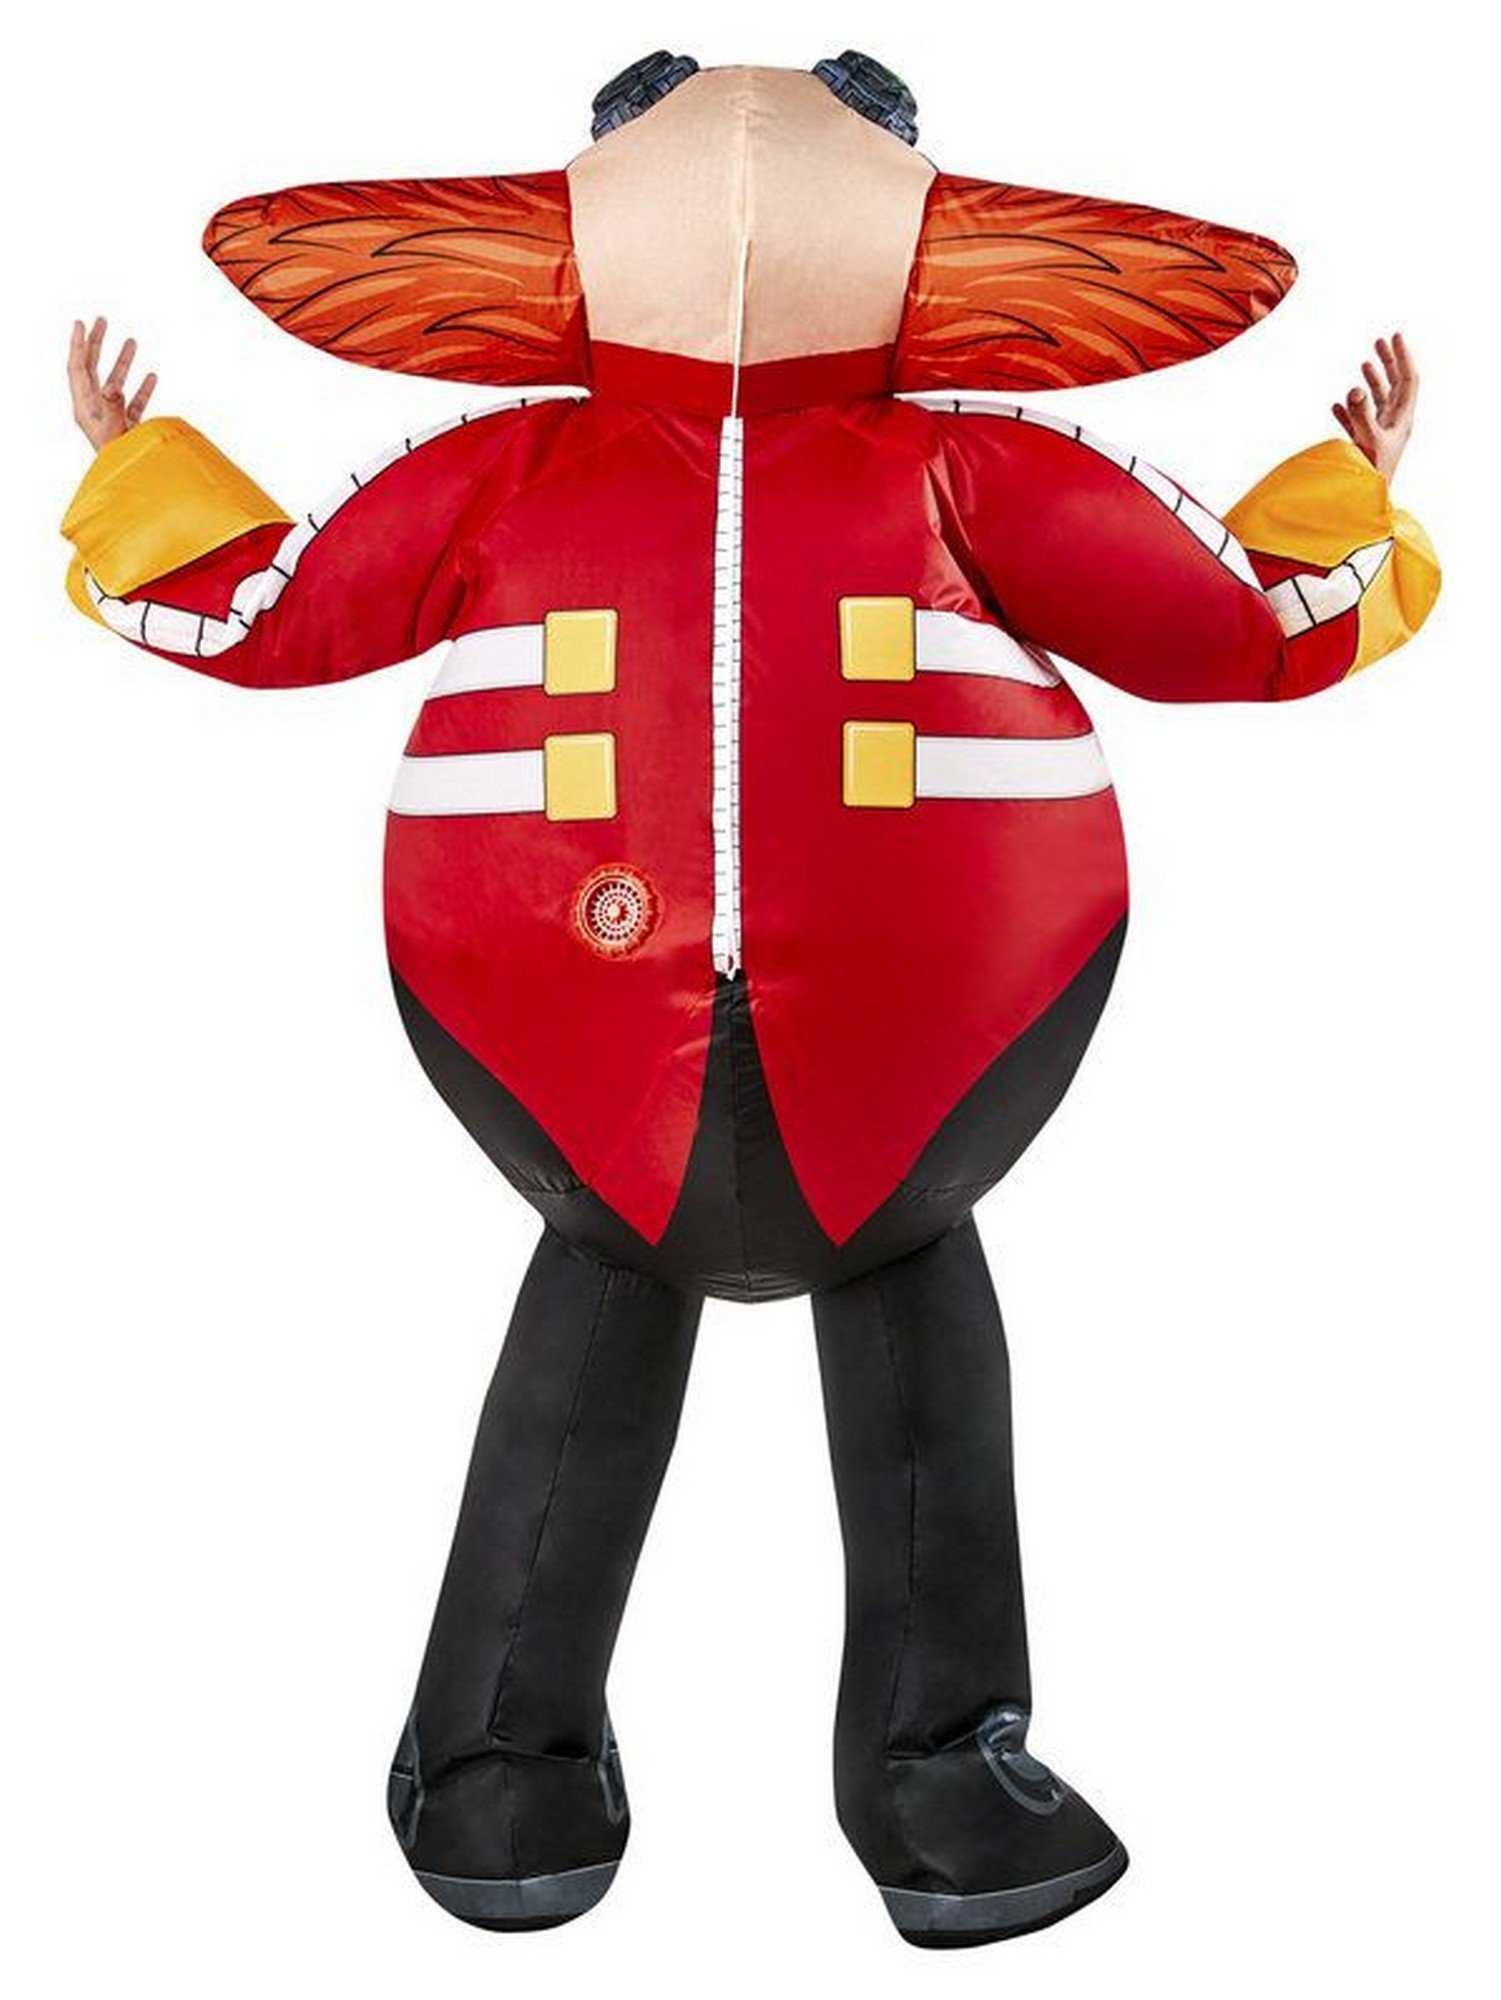 Sonic the Hedgehog Dr. Eggman Inflatable Adult Costume, , hi-res